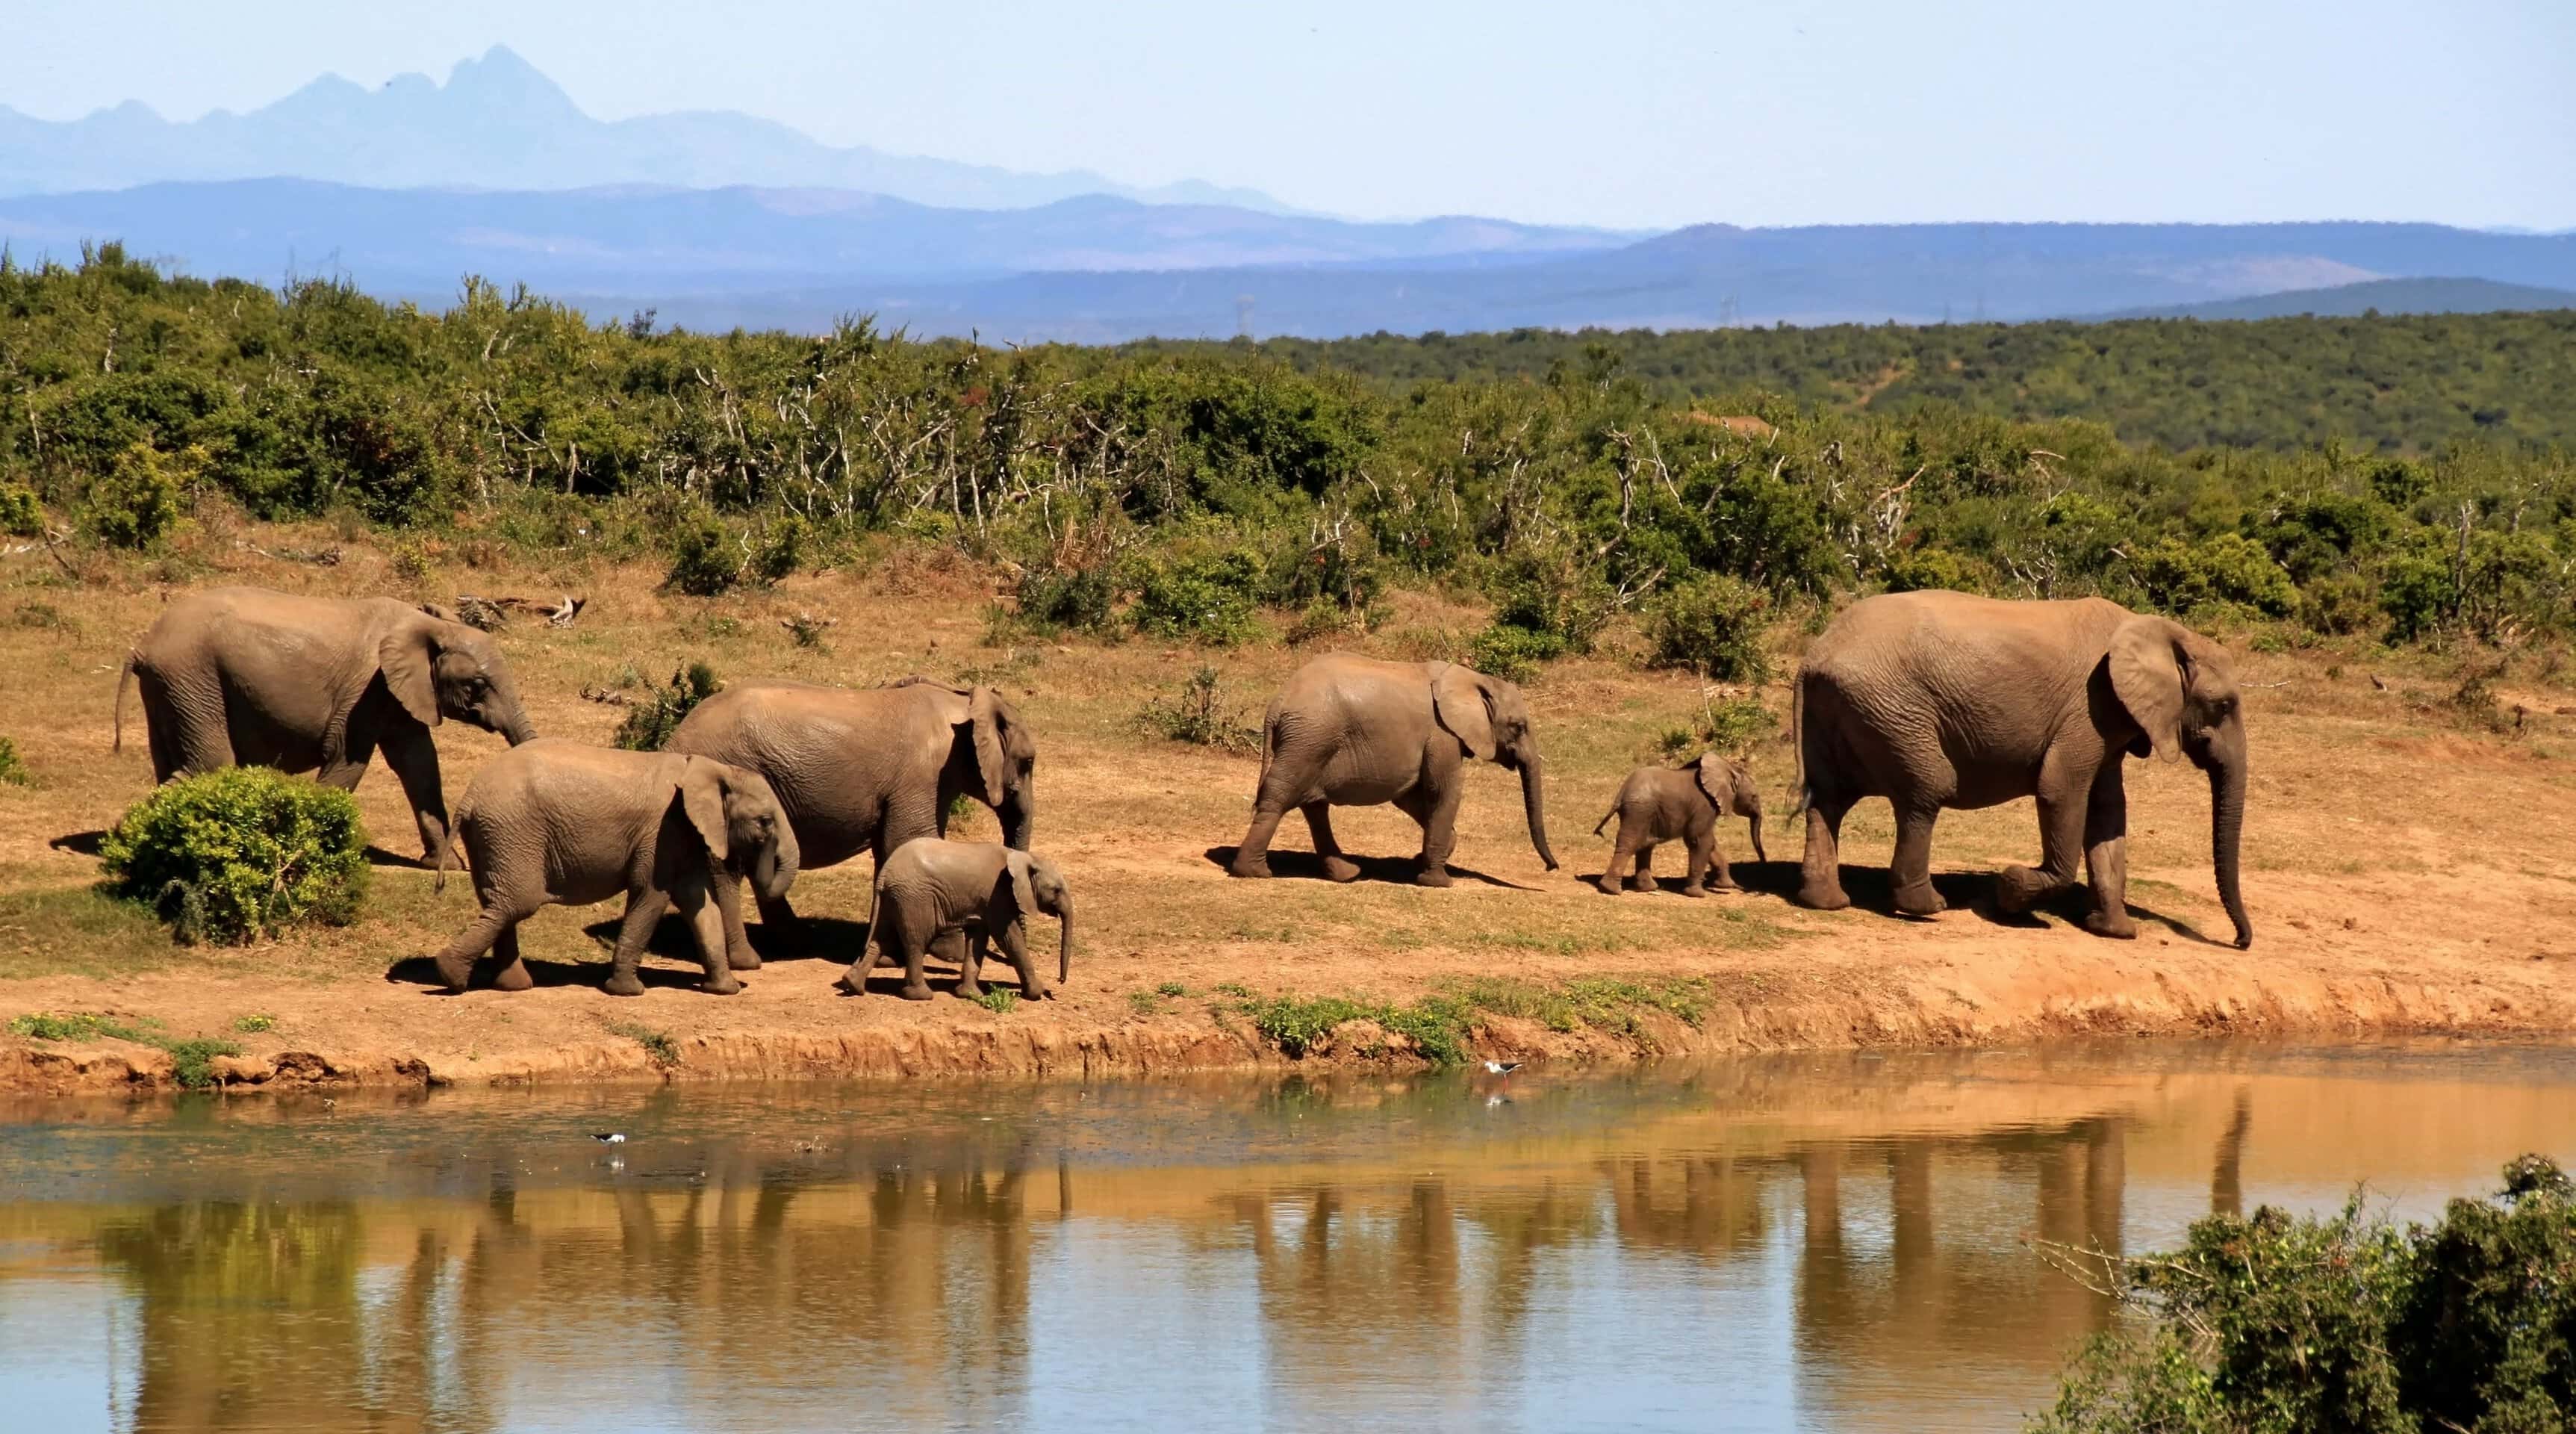 Elephants walking next to water